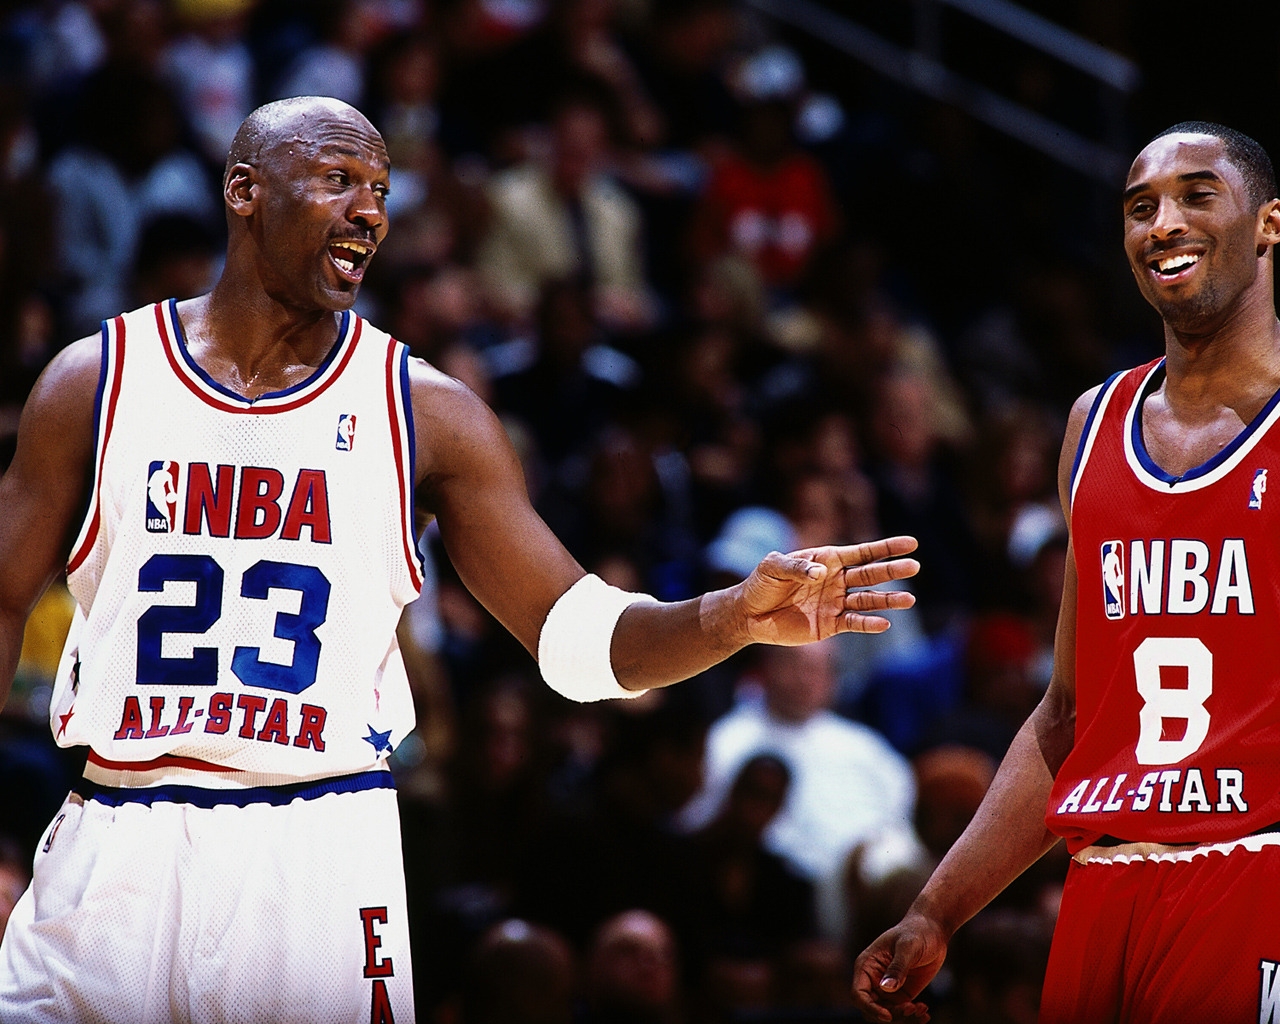 Kobe Bryant and Michael Jordan for 1280 x 1024 resolution